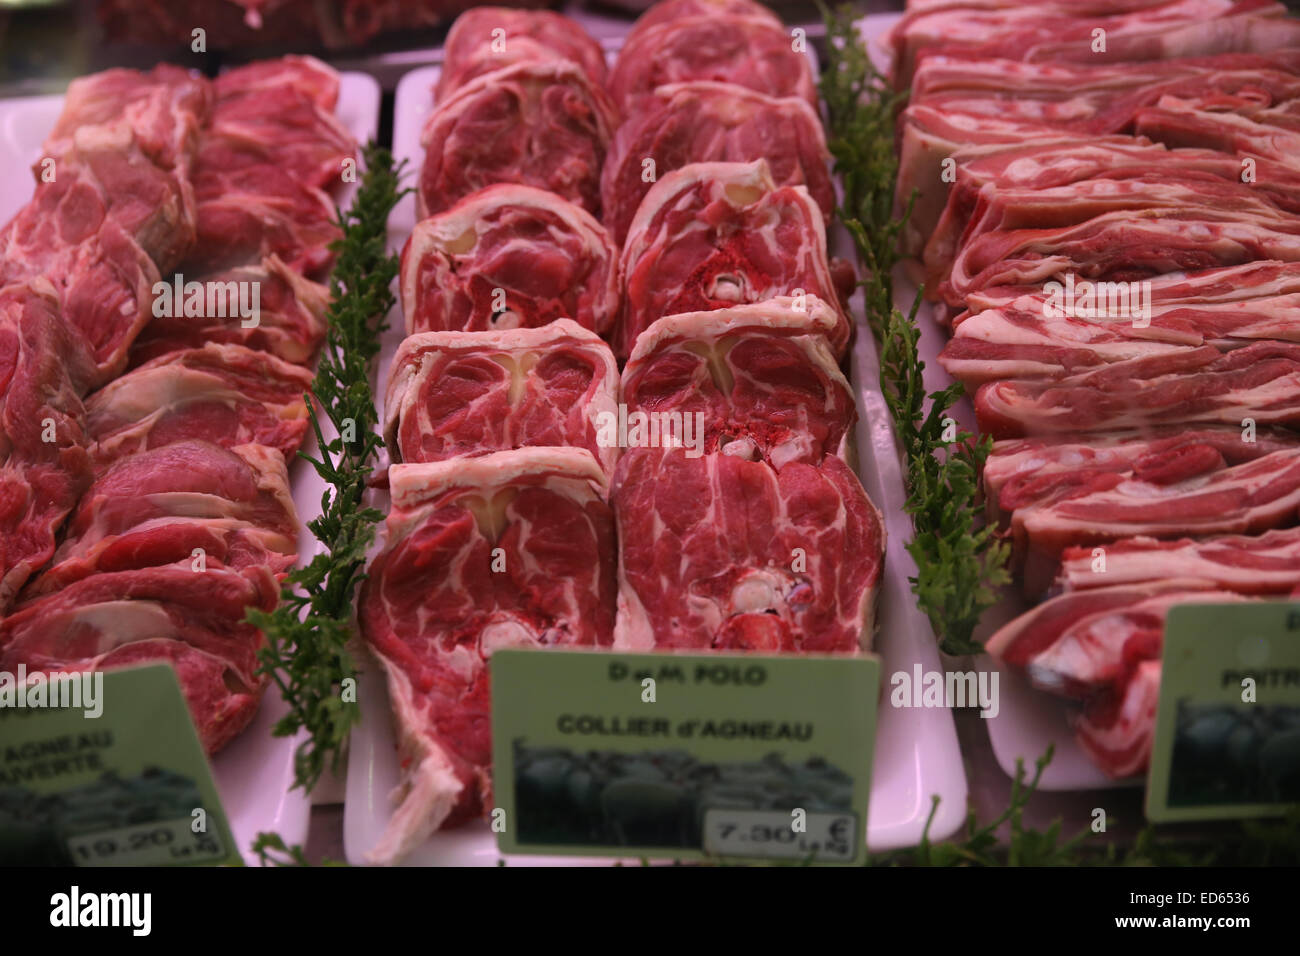 Paris fresh produce market meat section Stock Photo